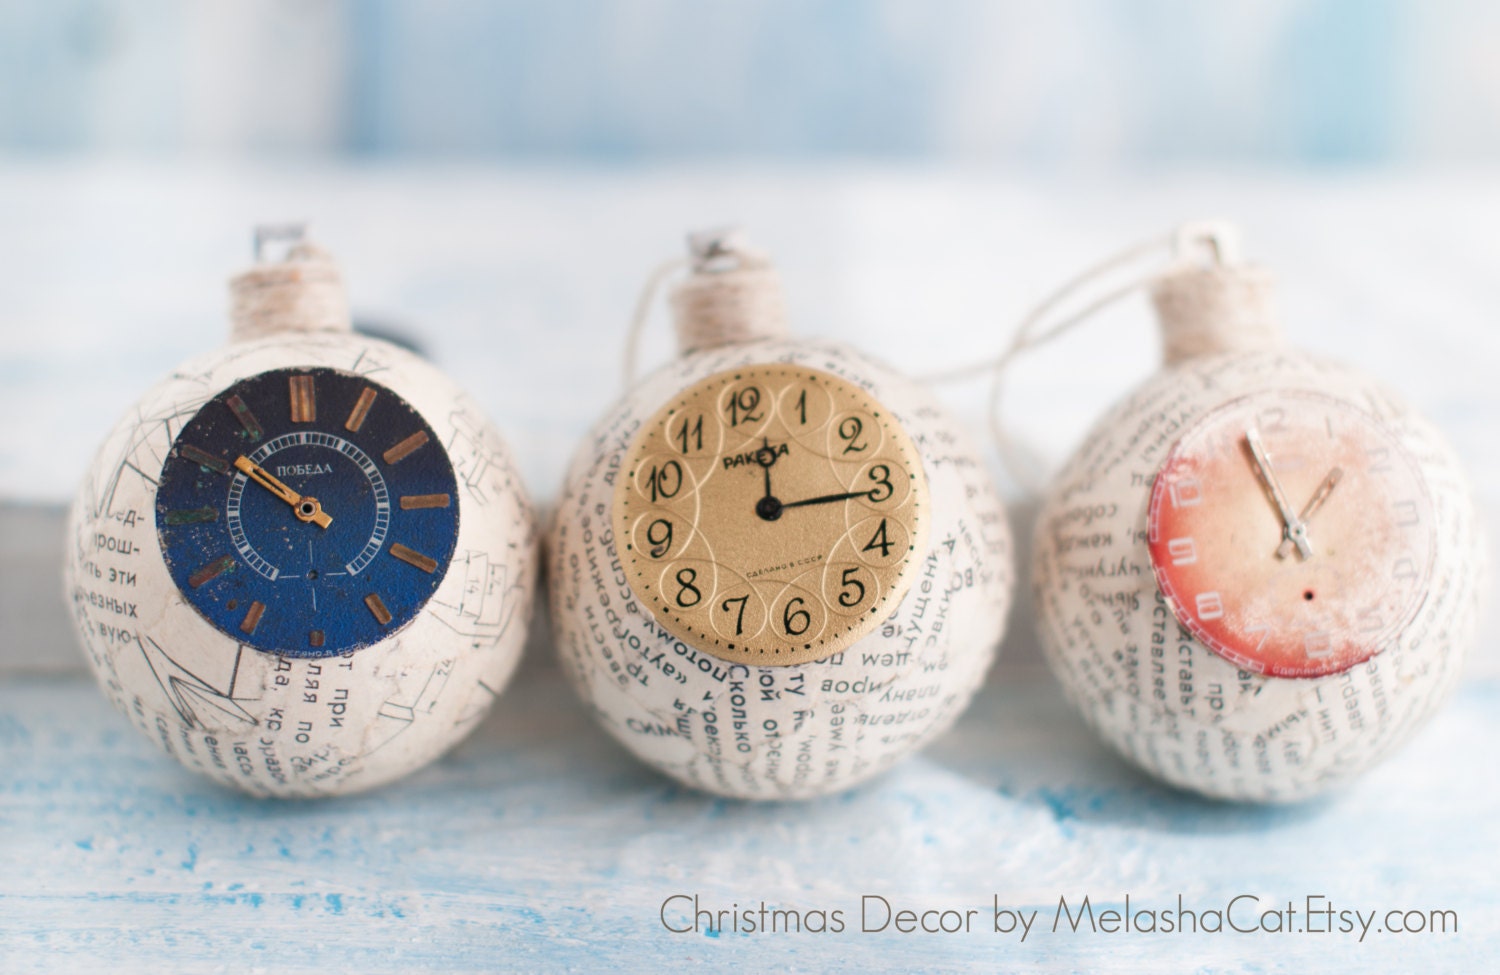 Christmas Ornaments - Christmas Decorations - Christmas Tree Balls - Holiday Decorations - Christmas Crafts - Blue White - Set of 3 - MelashaCat